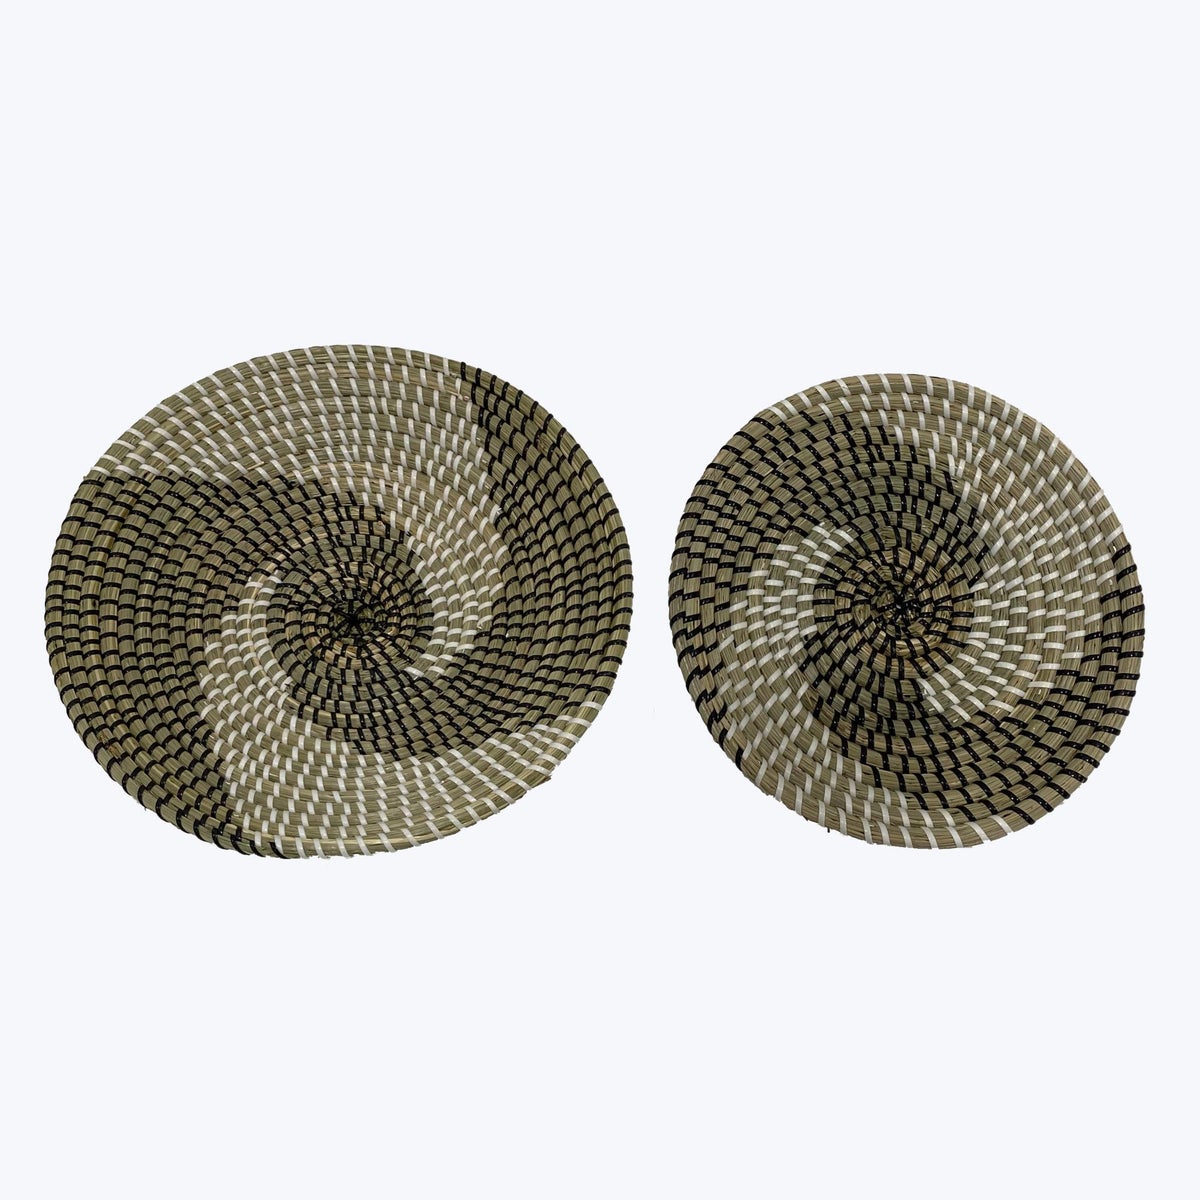 Handwoven Seagrass Basket Wall/Tabletop Decor, 2 pcs/Set